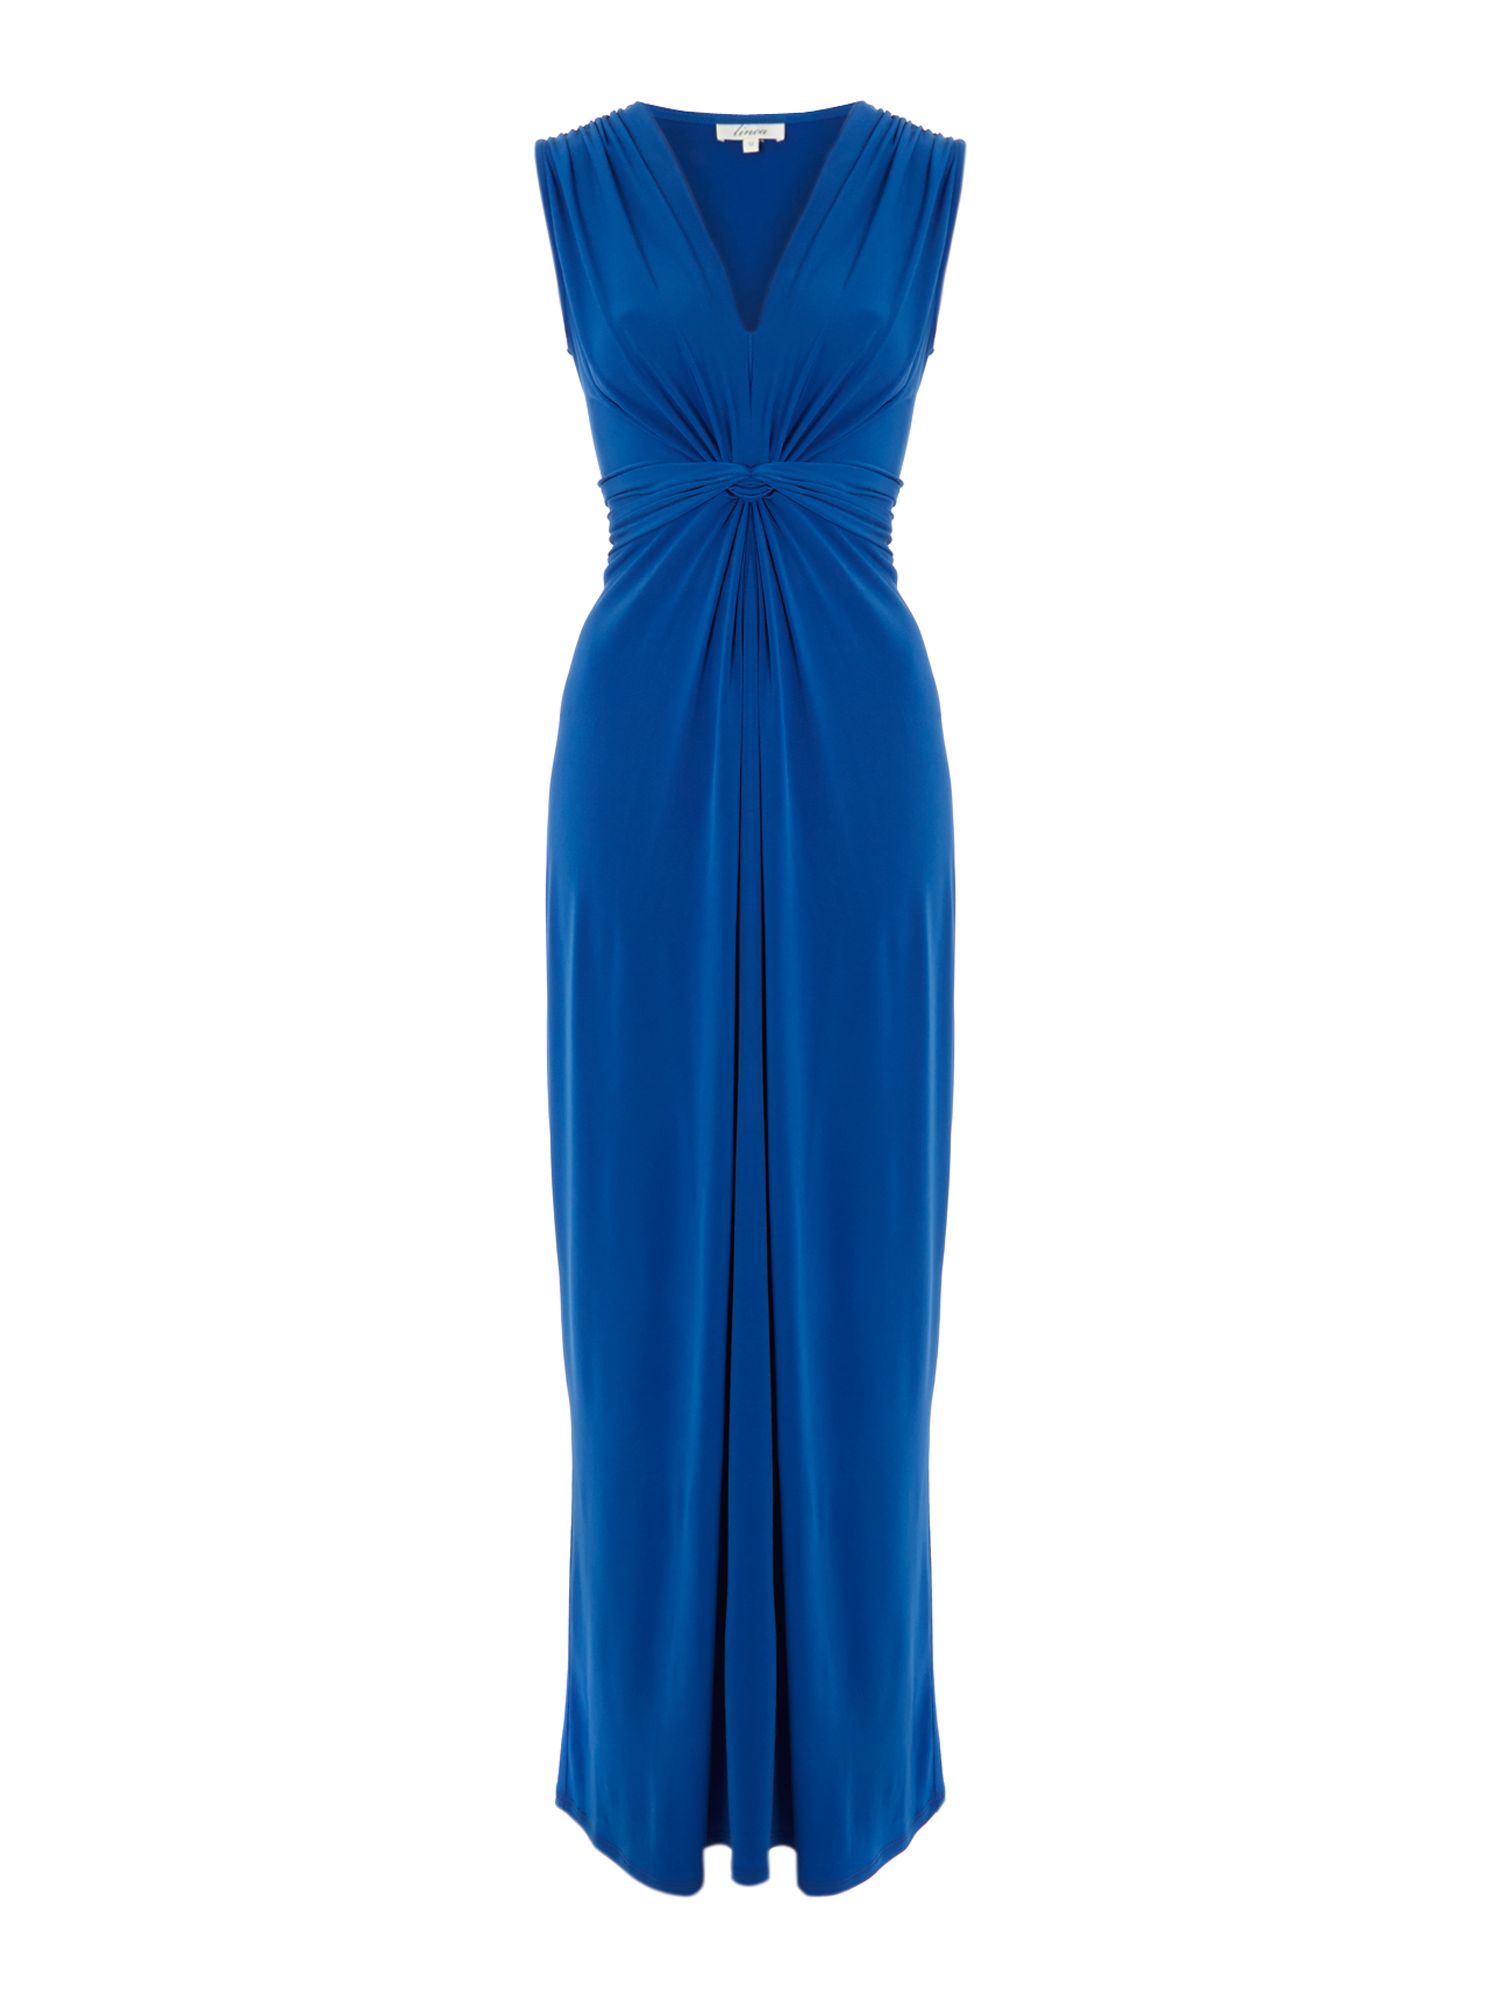 Linea Knot Front Maxi Dress in Blue (Cobalt) | Lyst